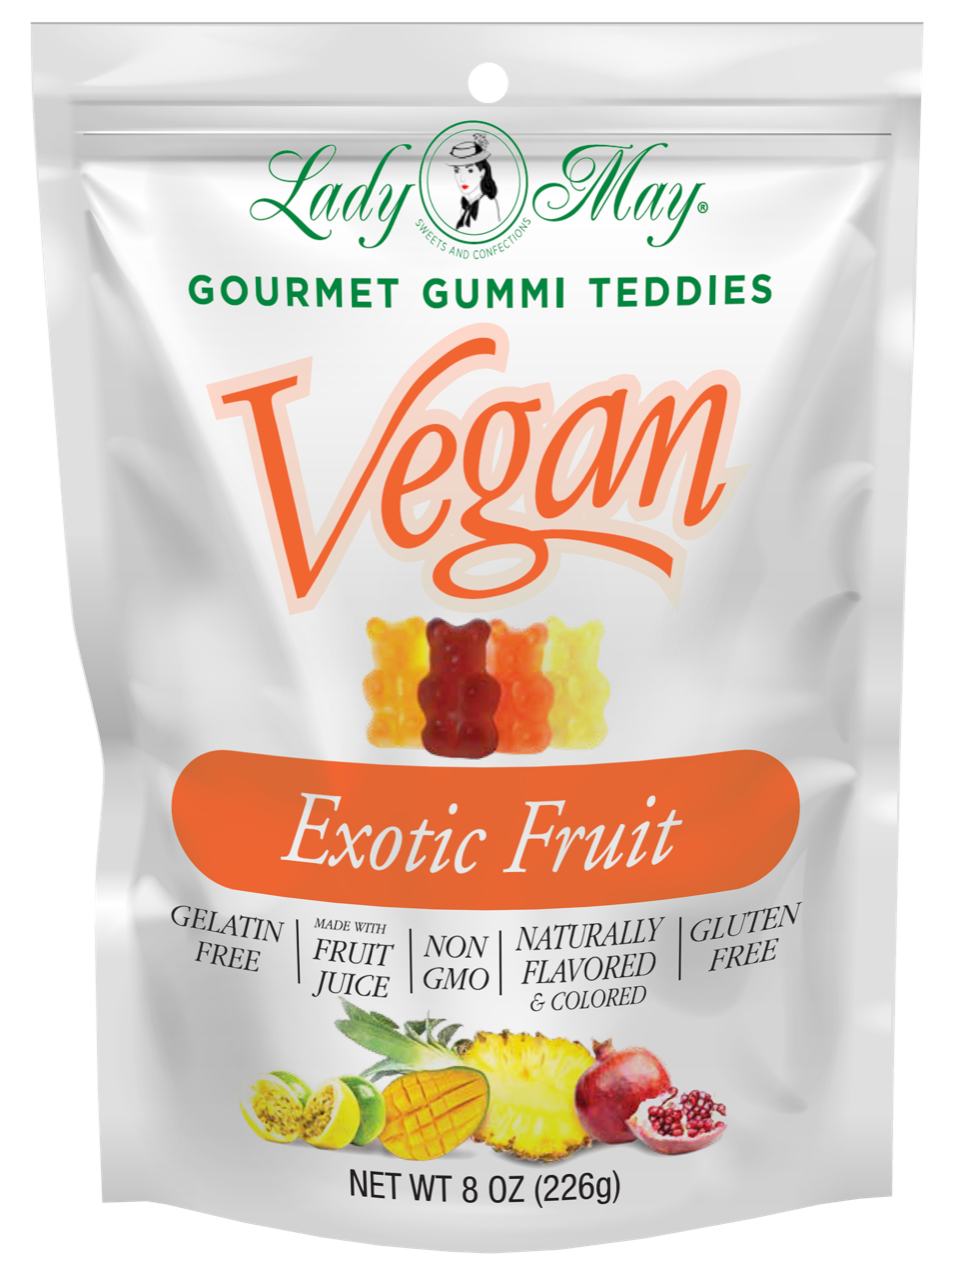 8oz Vegan Gourmet Exotic Fruit Gummi Teddies